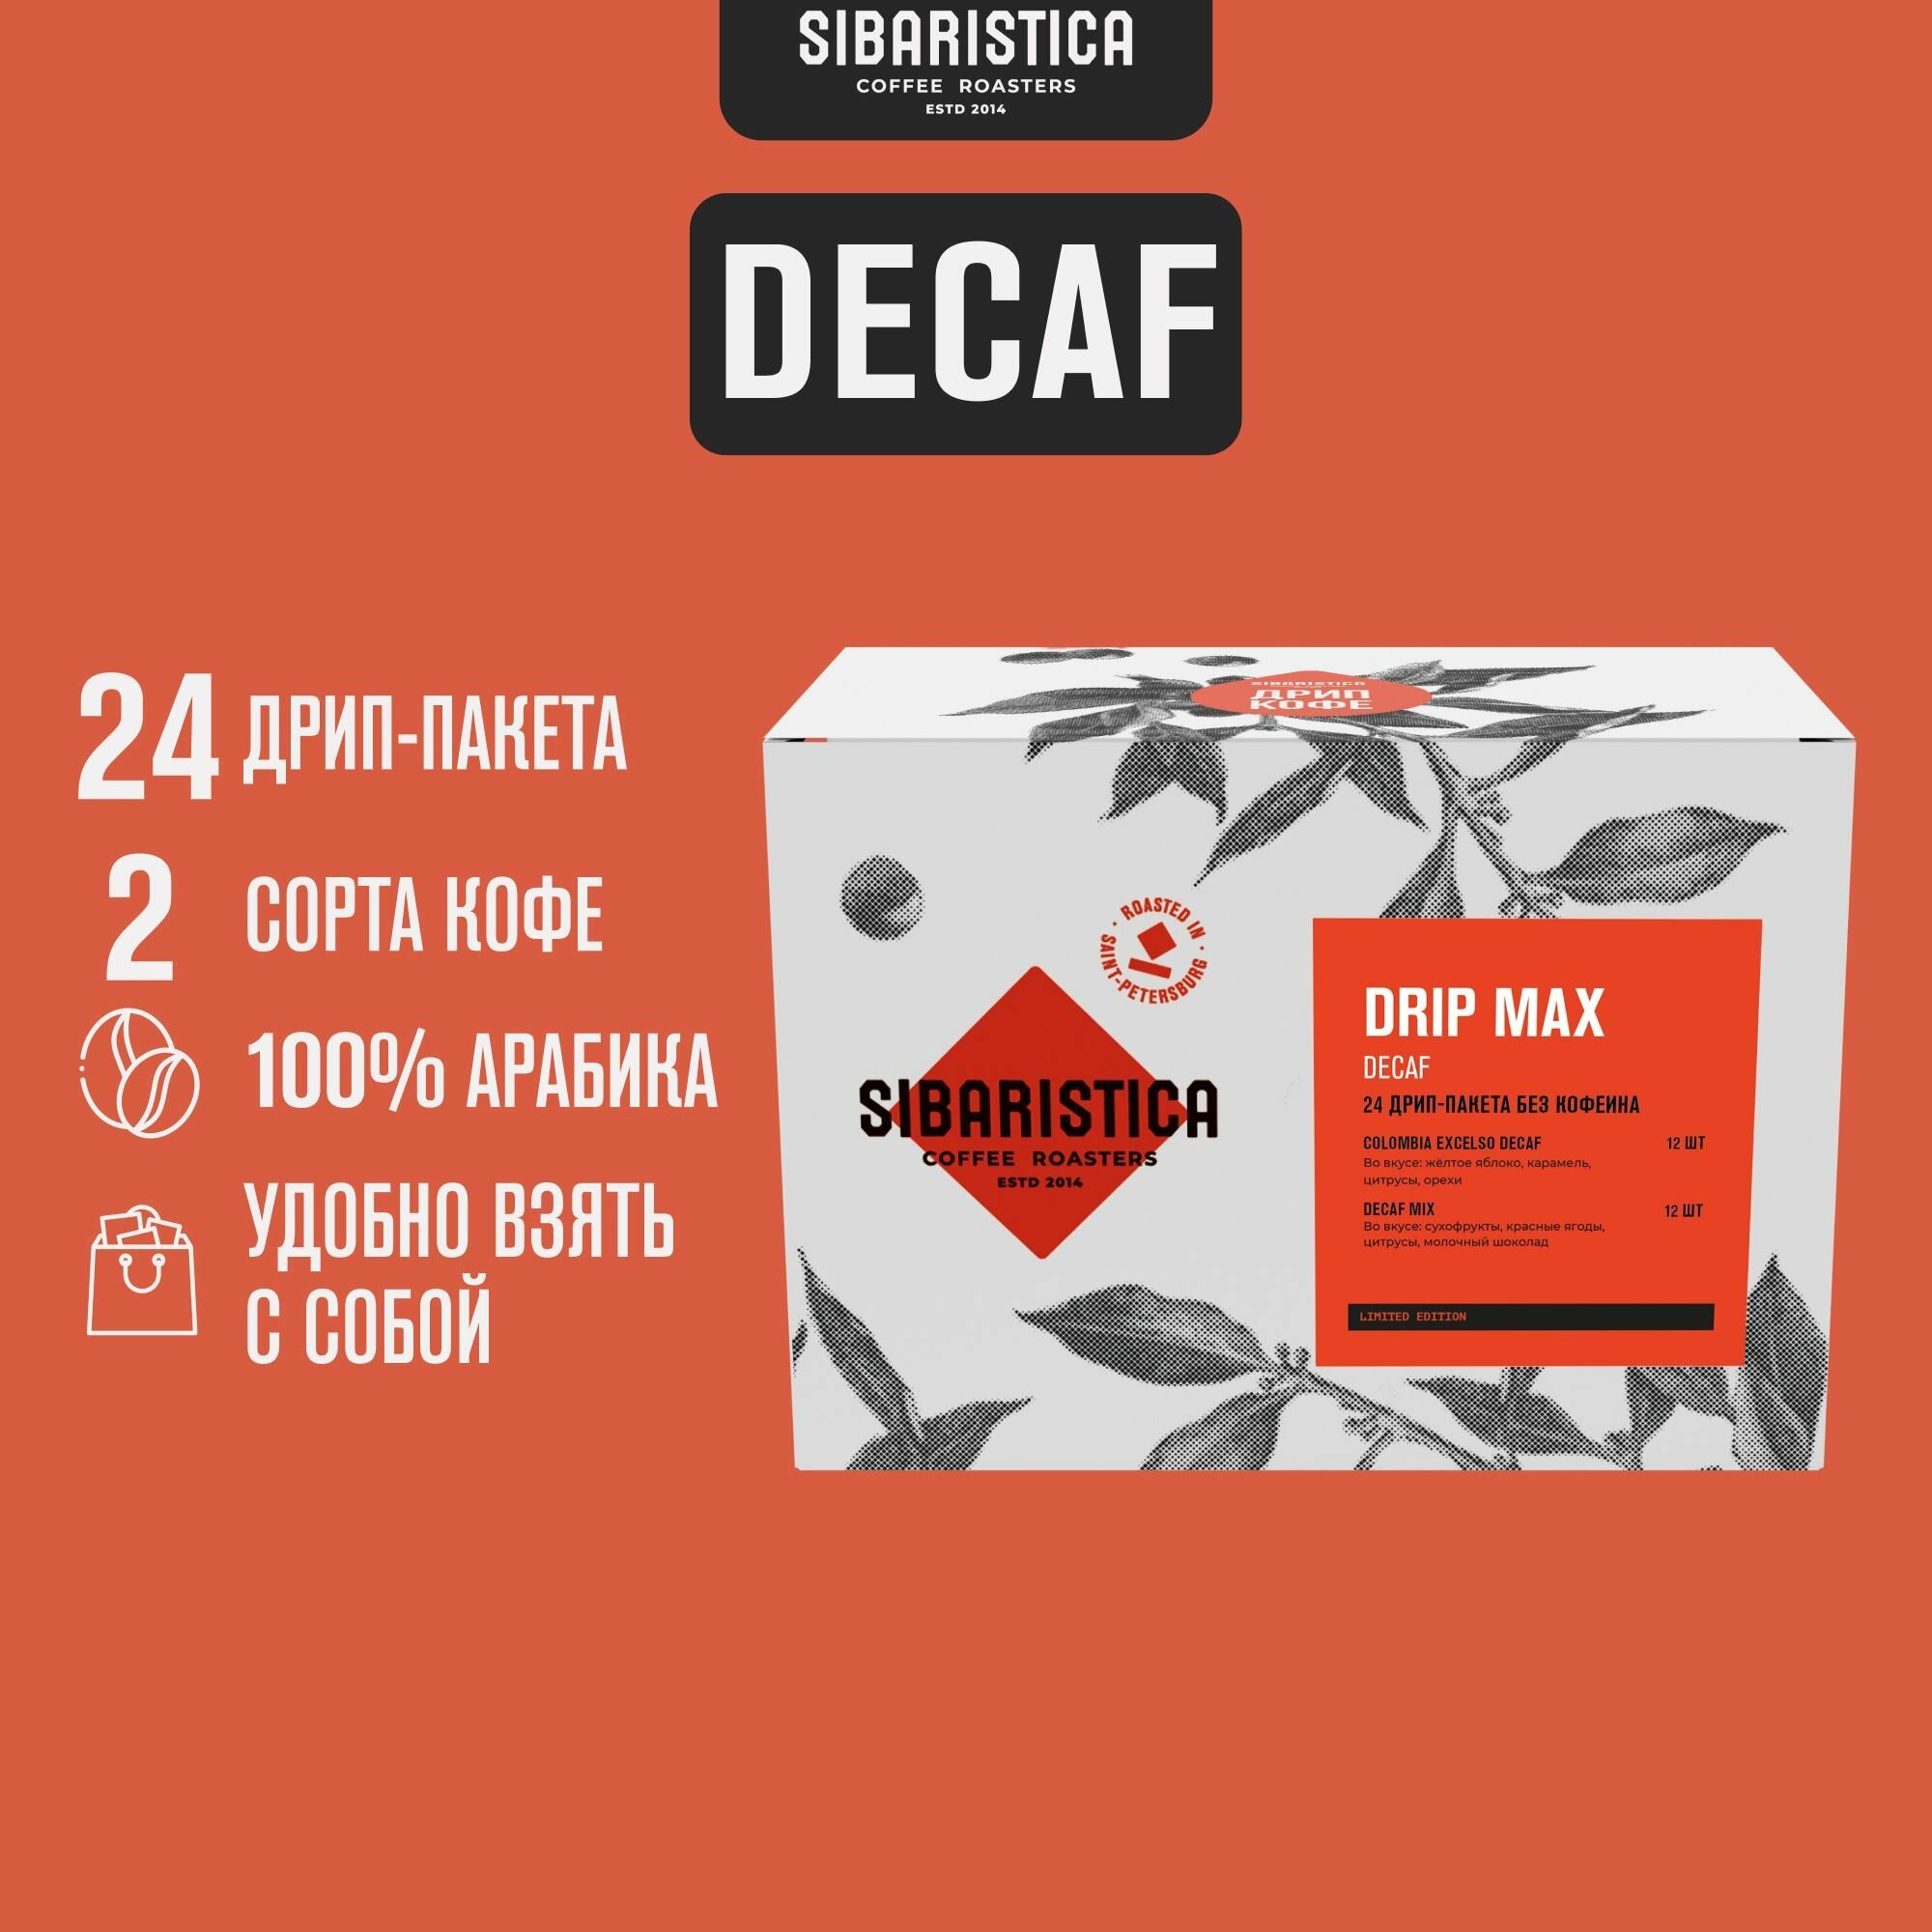 Дрип кофе Sibaristica Drip Max Decaf, Колумбия, Декаф Микс (Набор молотого кофе в дрип-пакетах) 24шт*10гр